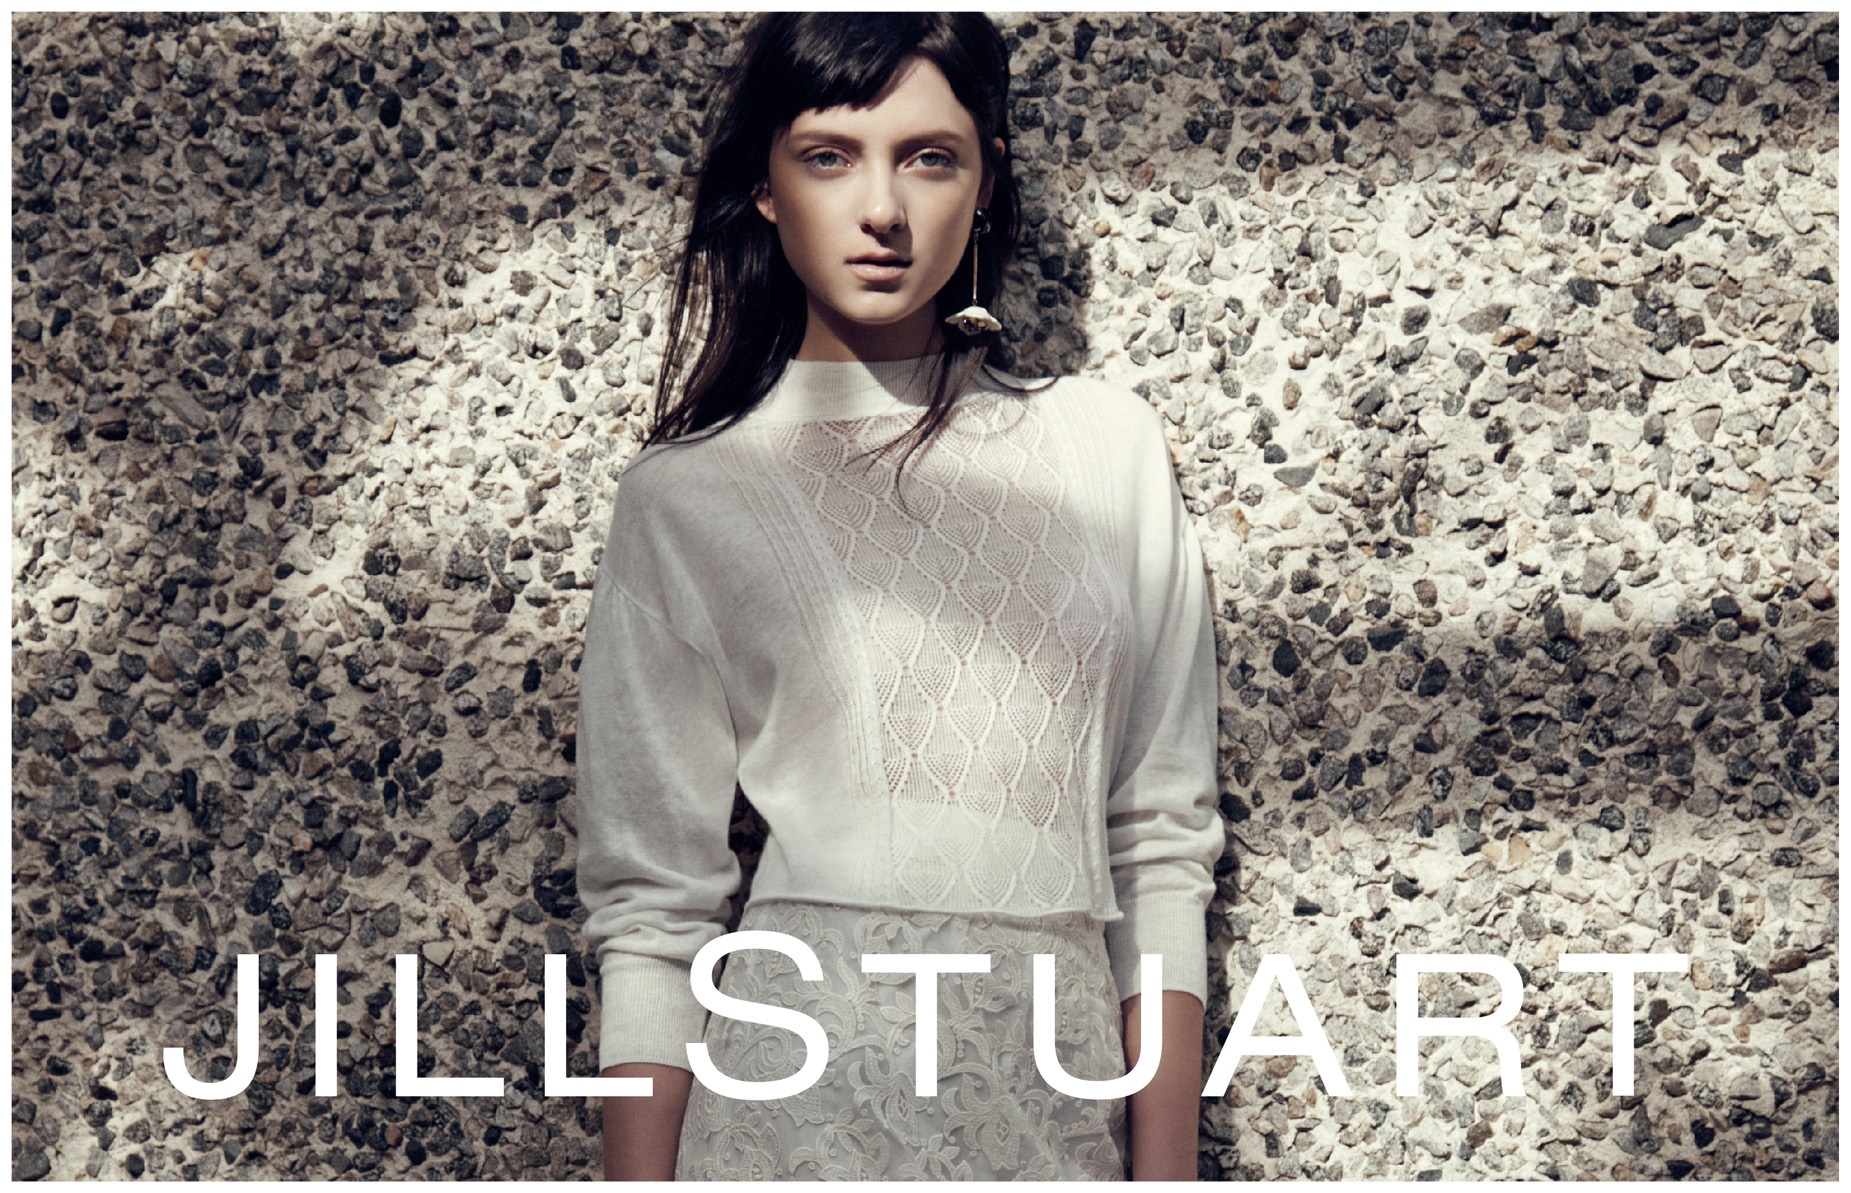 JILL STUART SS 2014 | Carlotta Manaigo | Jill Stuart | Numerique Retouch Photo Retouching Studio